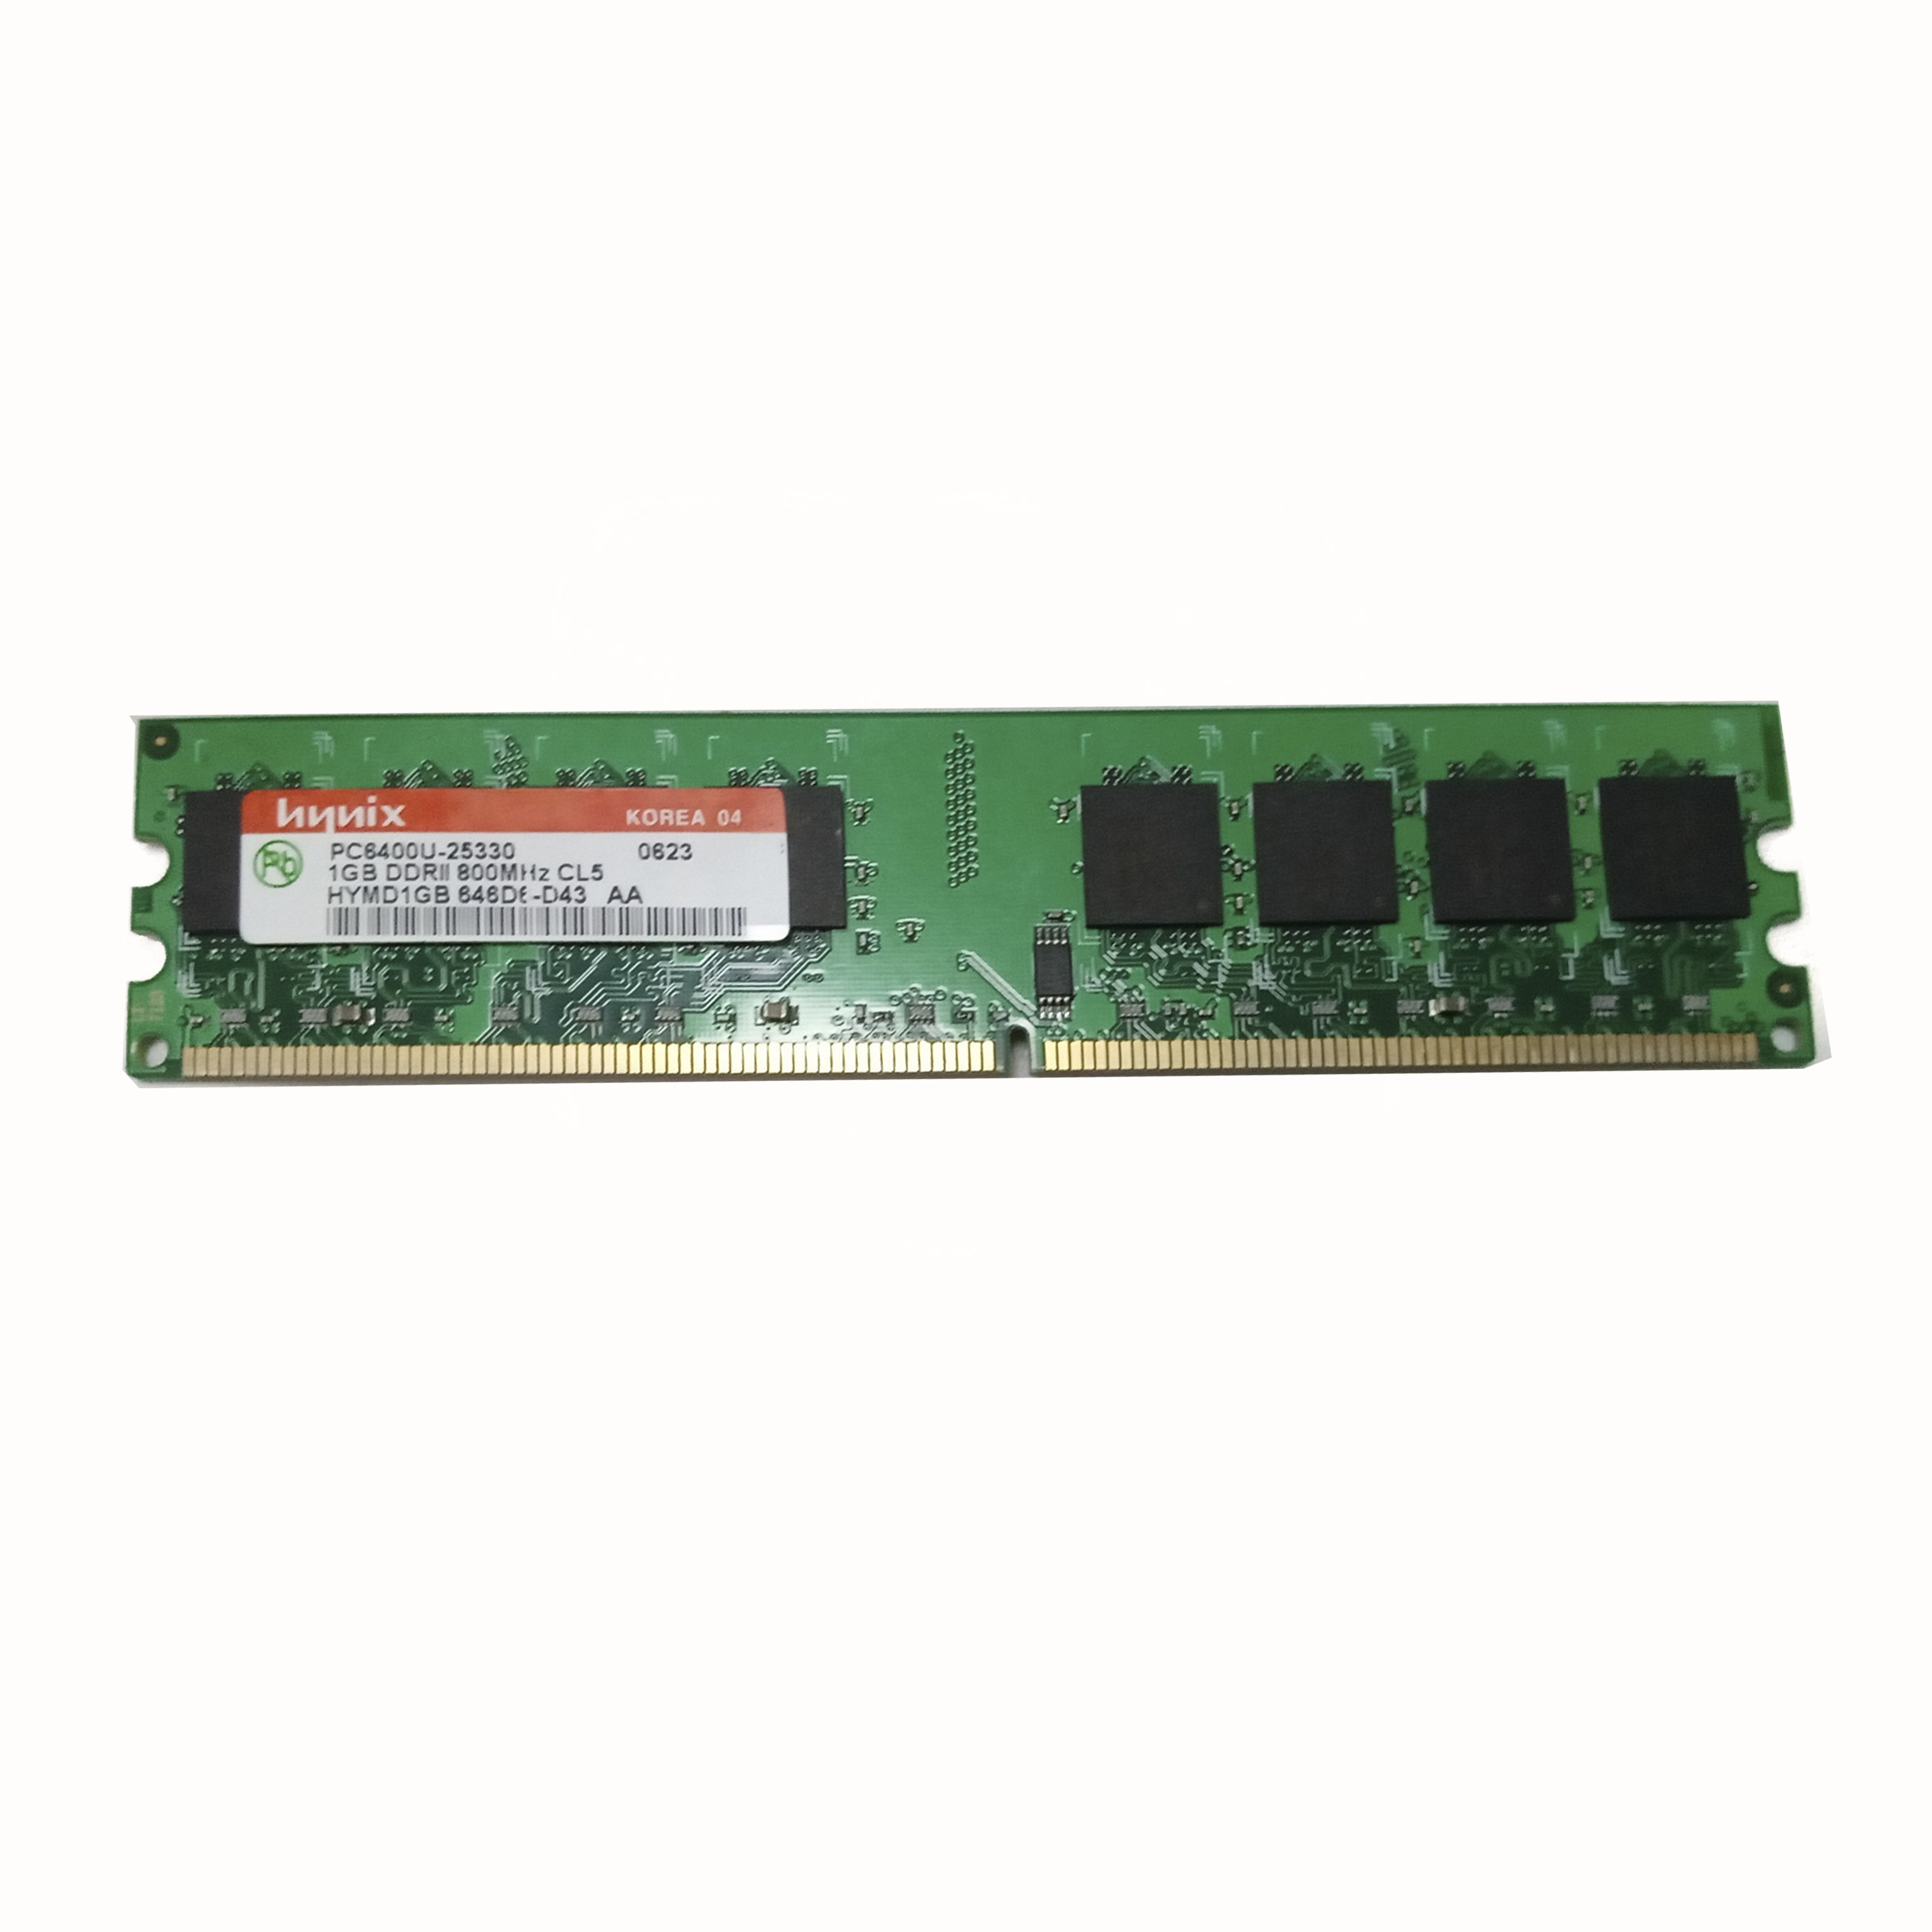 Оперативная память Himix PCUU-640025330 1GB DDR2 800MHz CL5 б/у